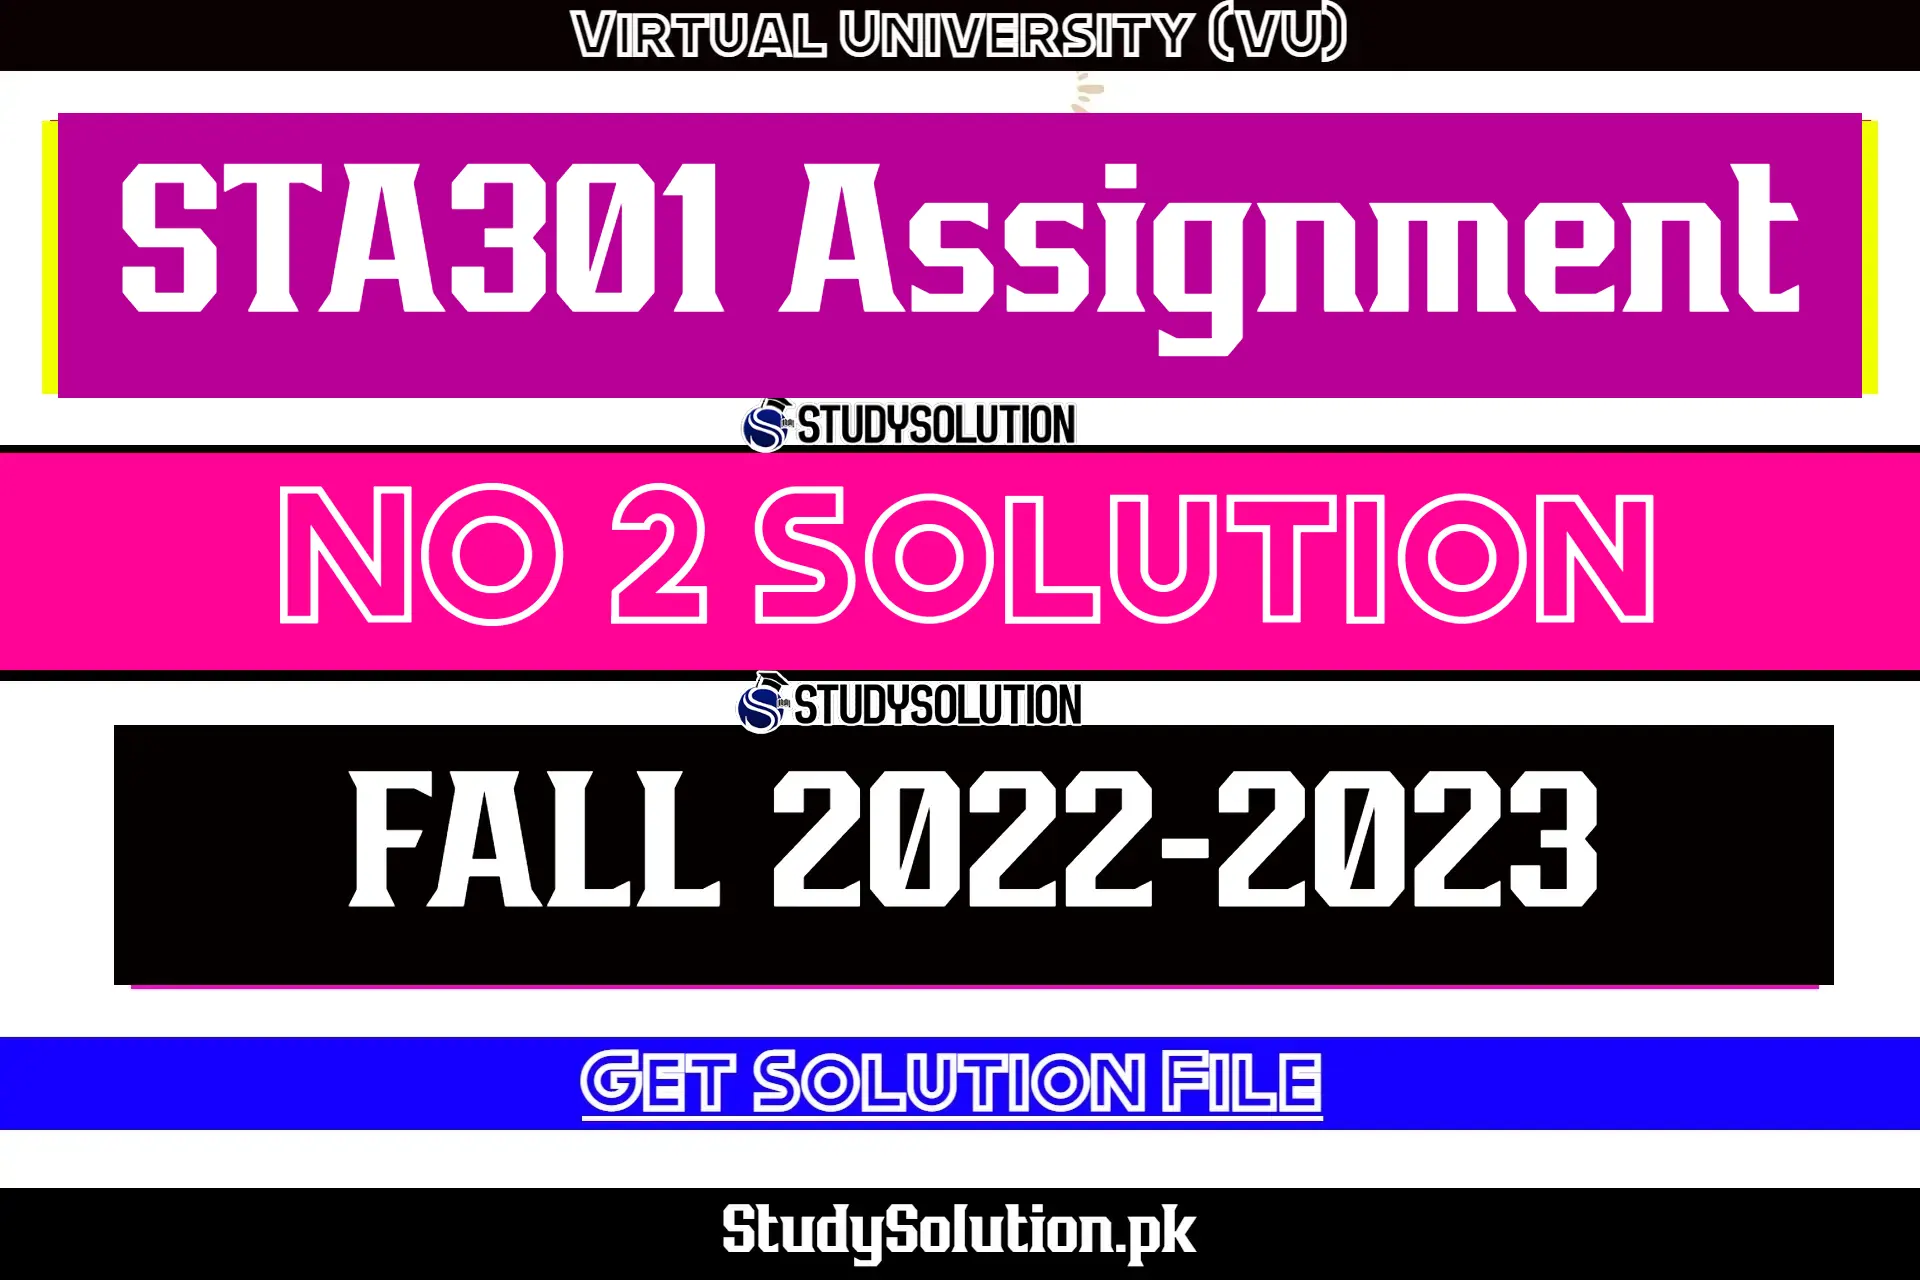 STA301 Assignment No 2 Solution Fall 2022